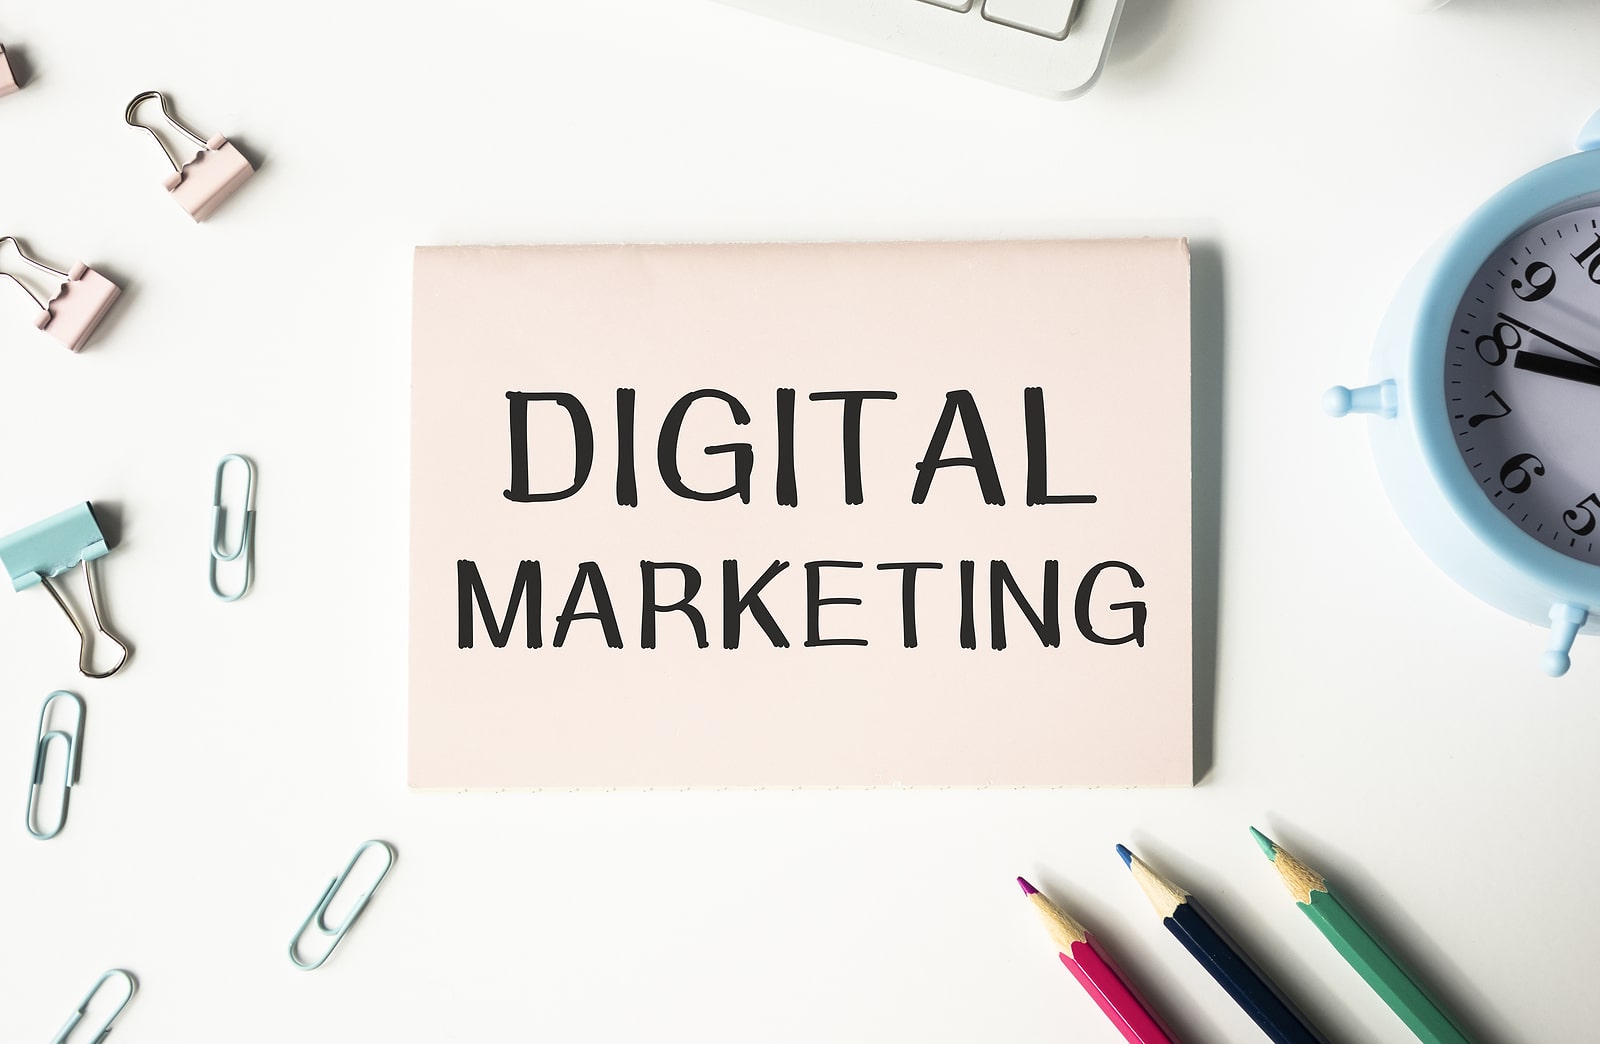 Digital marketing tools